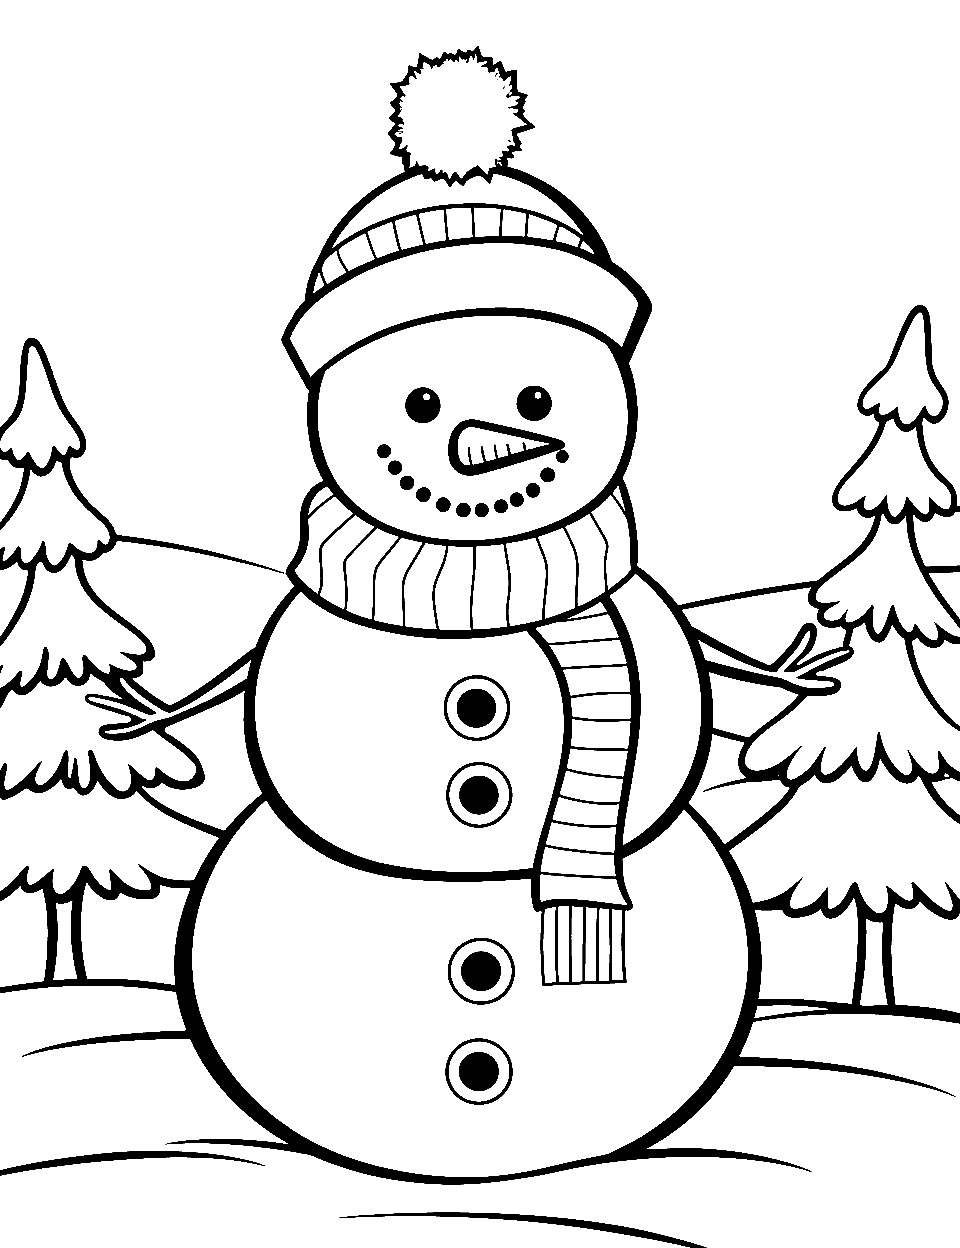 Winter Wonderland Scene Snowman Coloring Page - A snowman standing in a snowy winter landscape.